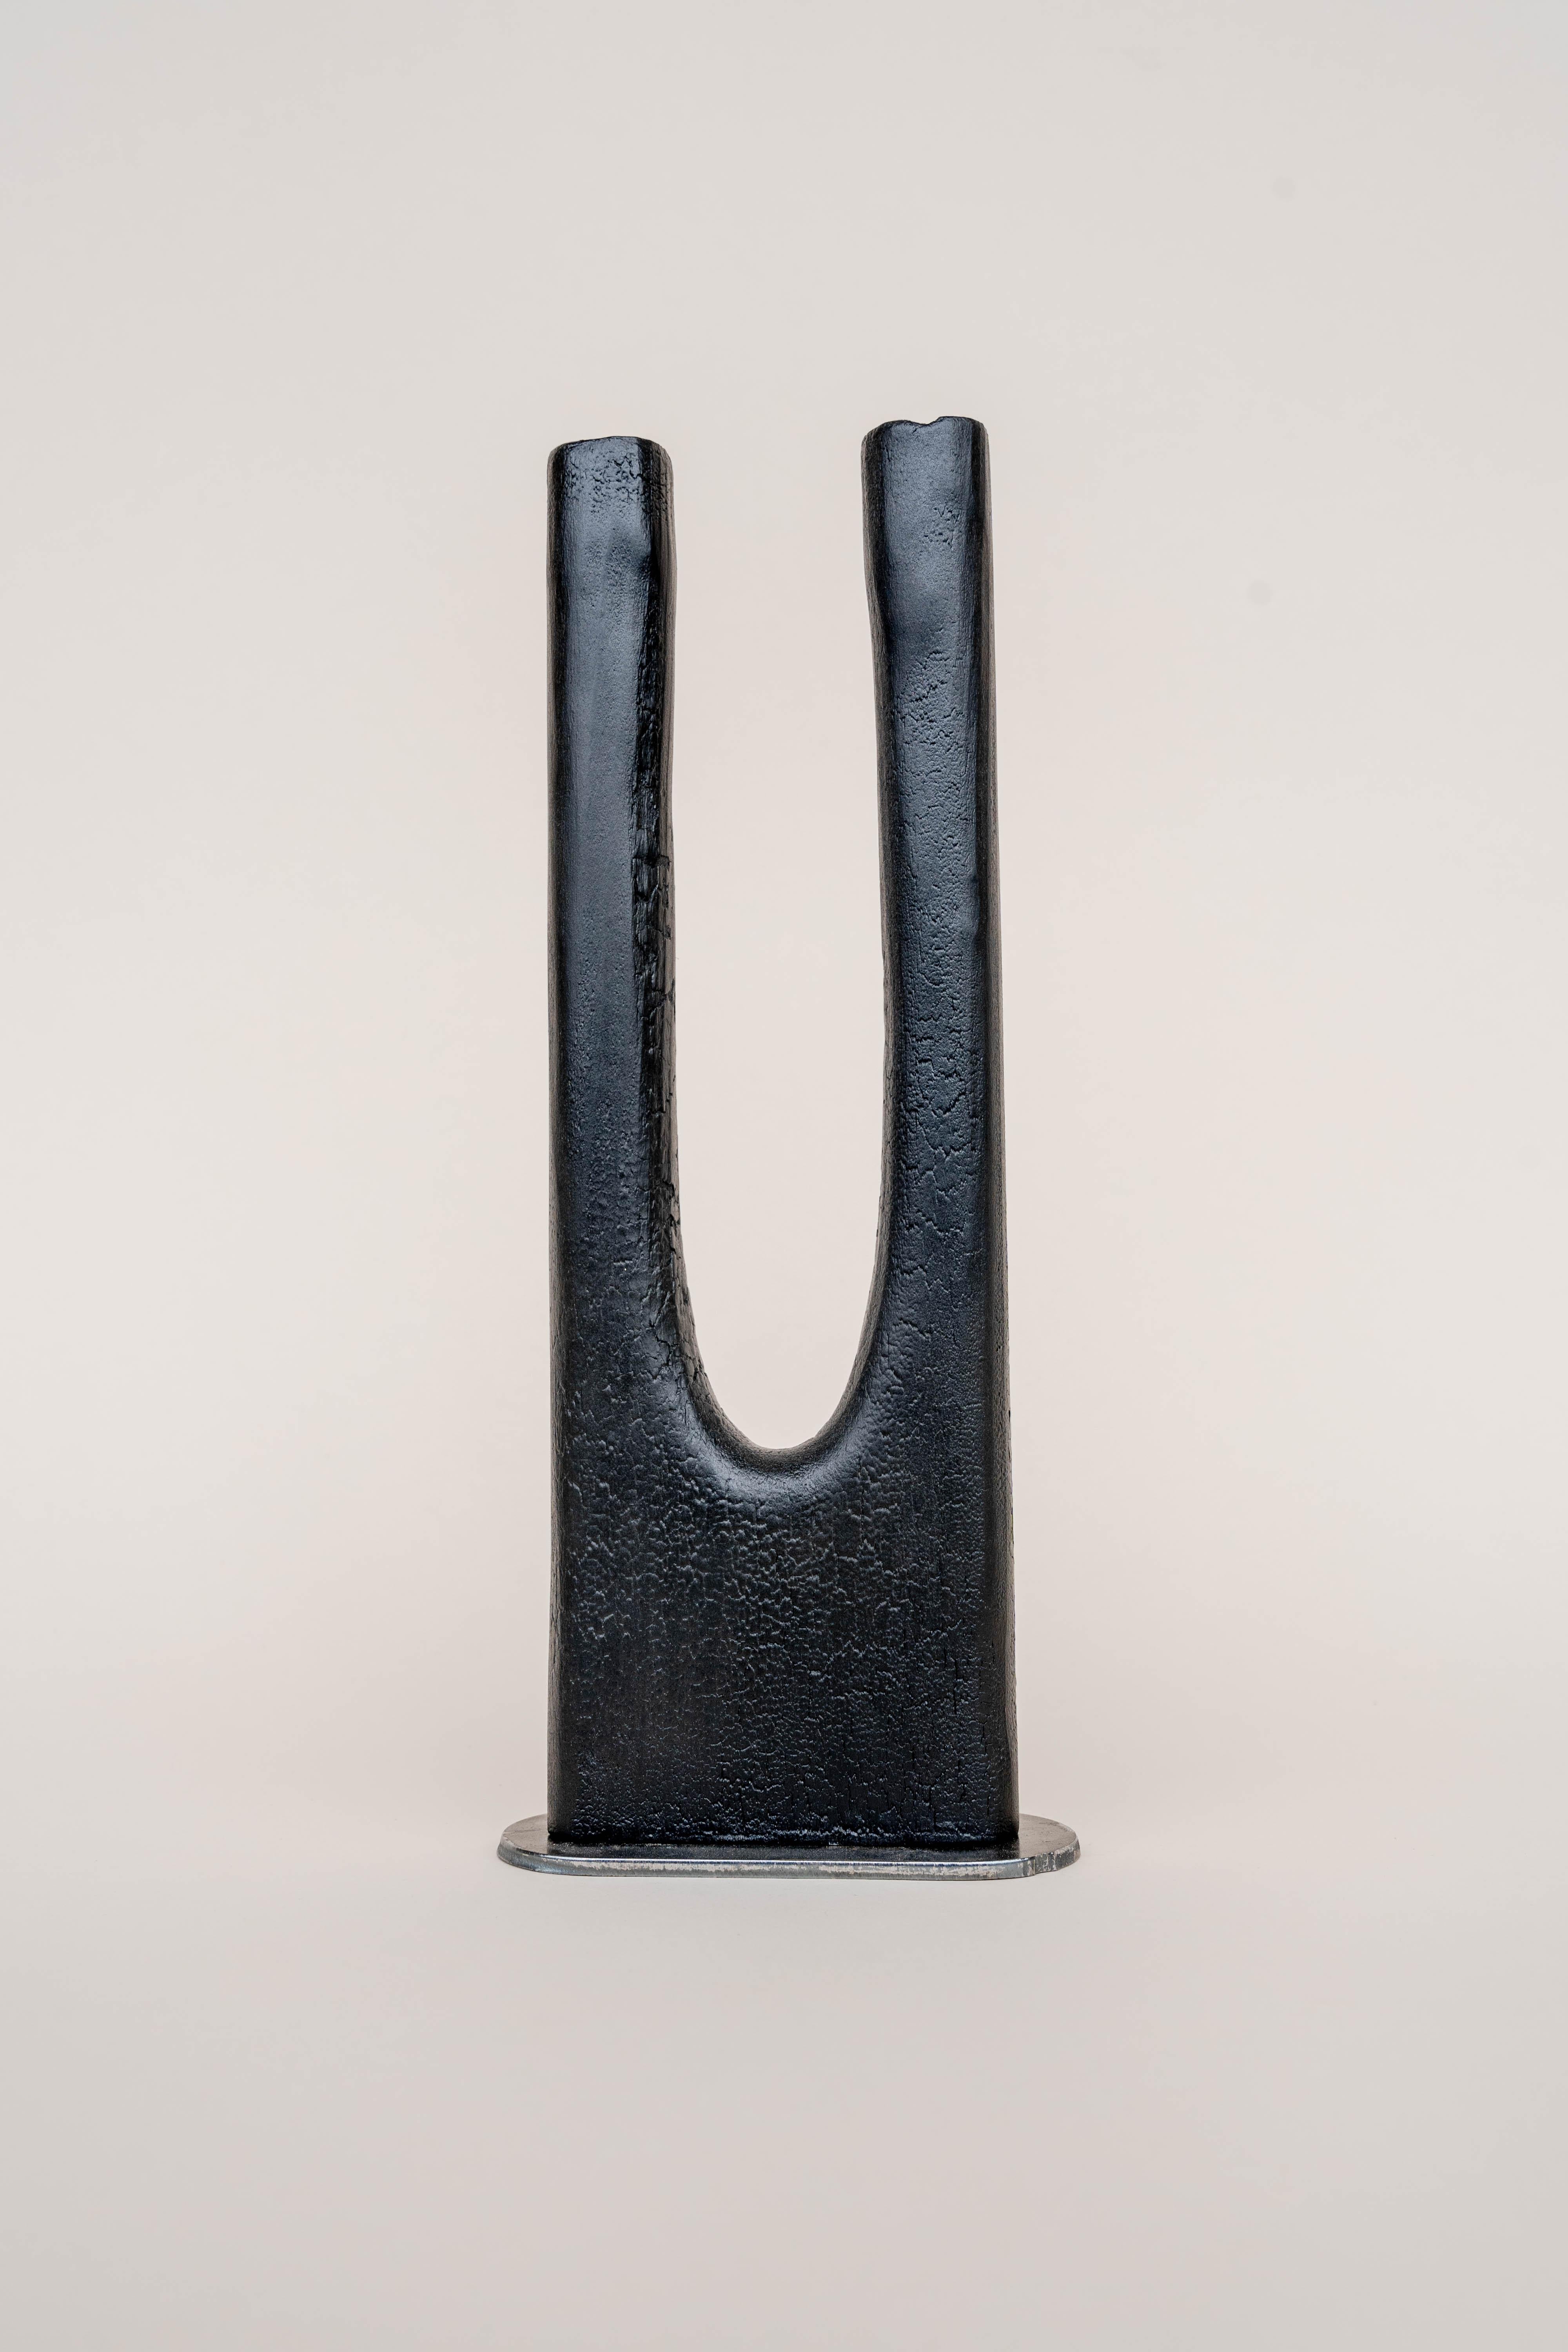 Contemporary Dou Vase by Daniel Elkayam